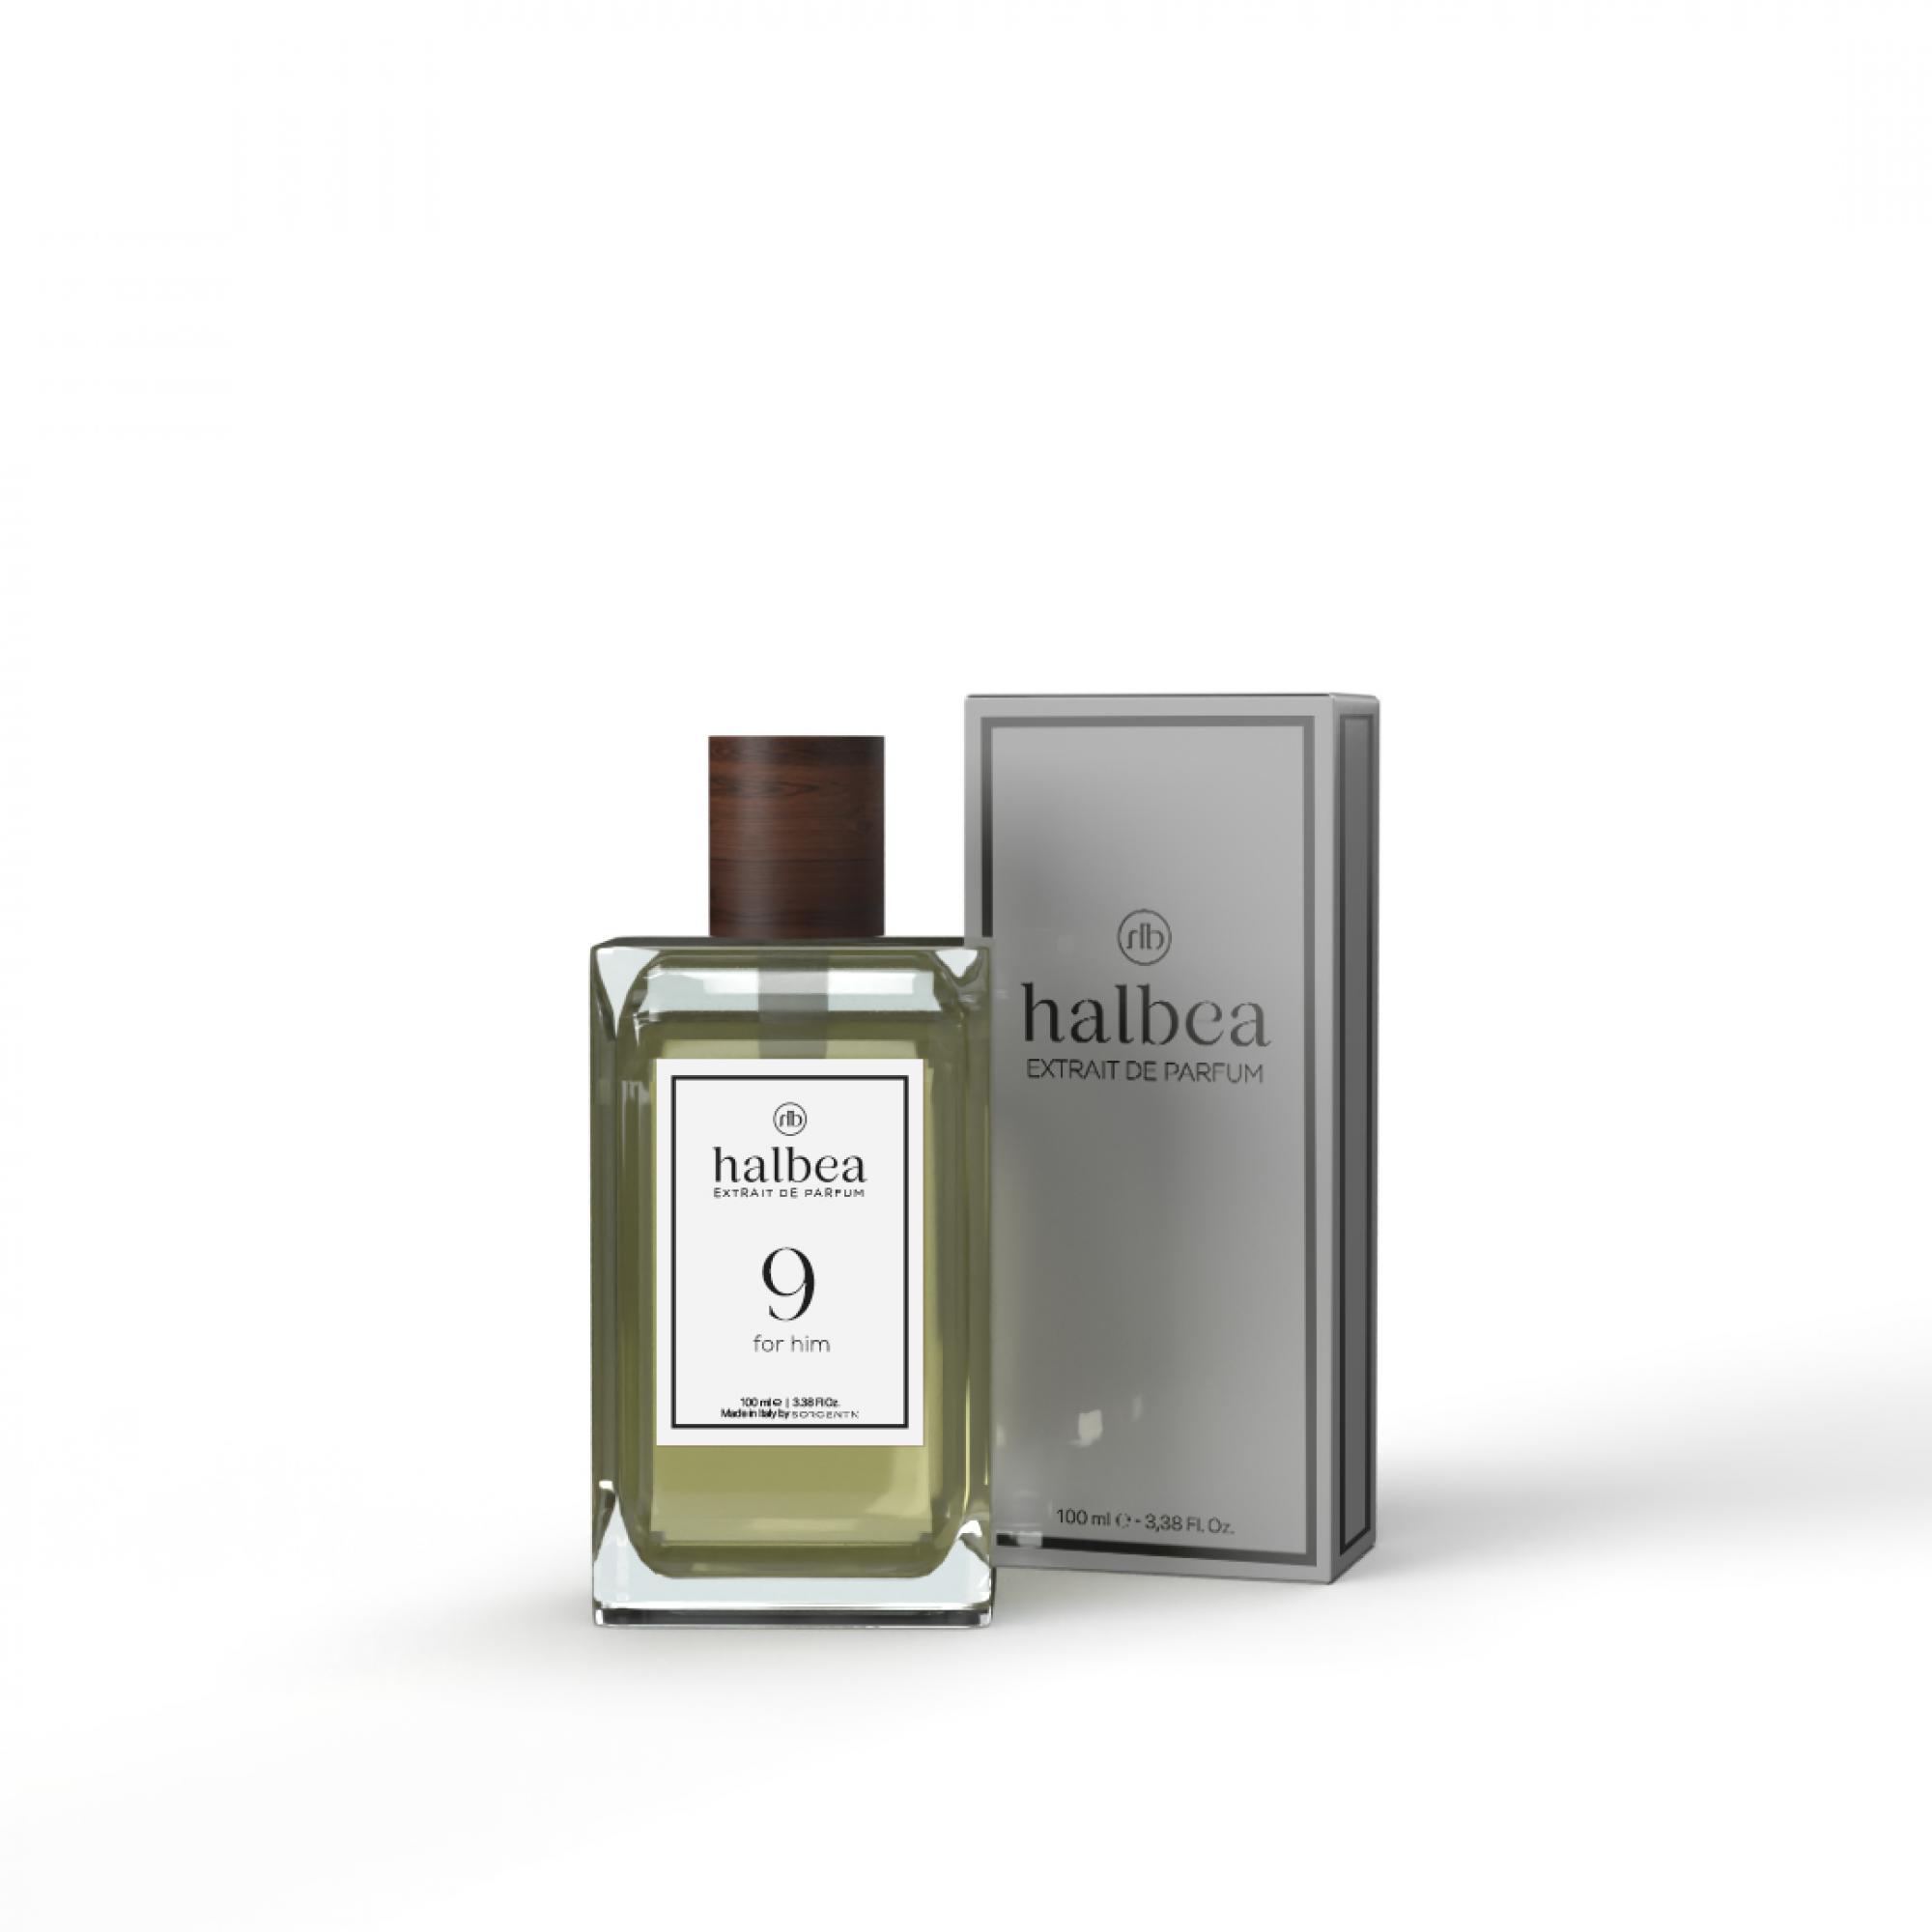 Halbea Parfum Nr. 9 insp. by Acqua Di Gi Giorgio Armani 100ml